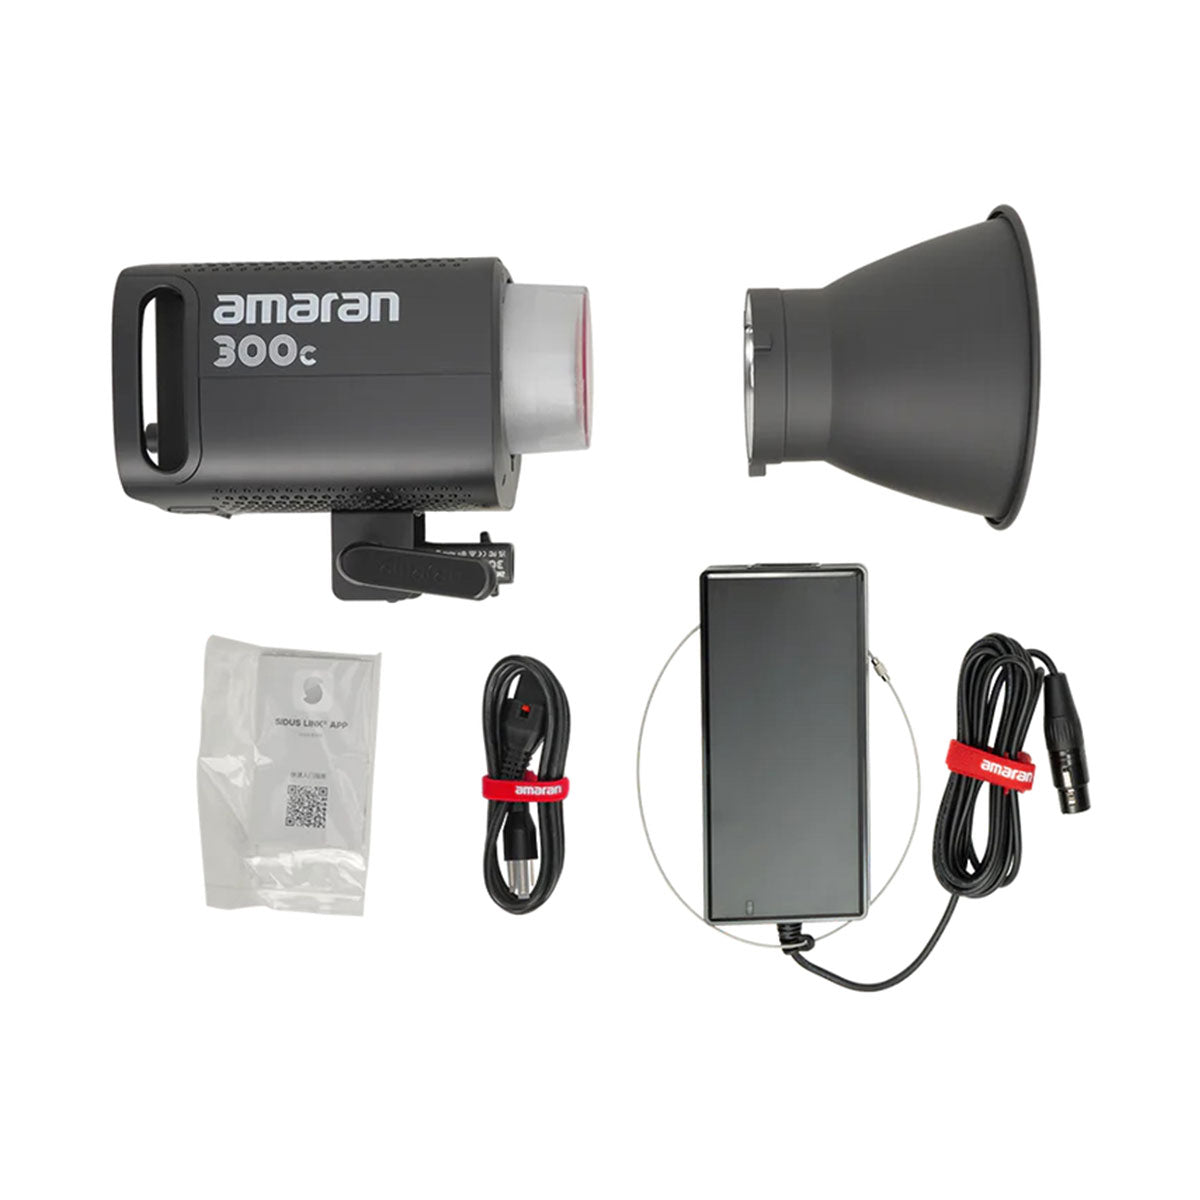 Amaran 300c RGB LED Light (Deep Gray)